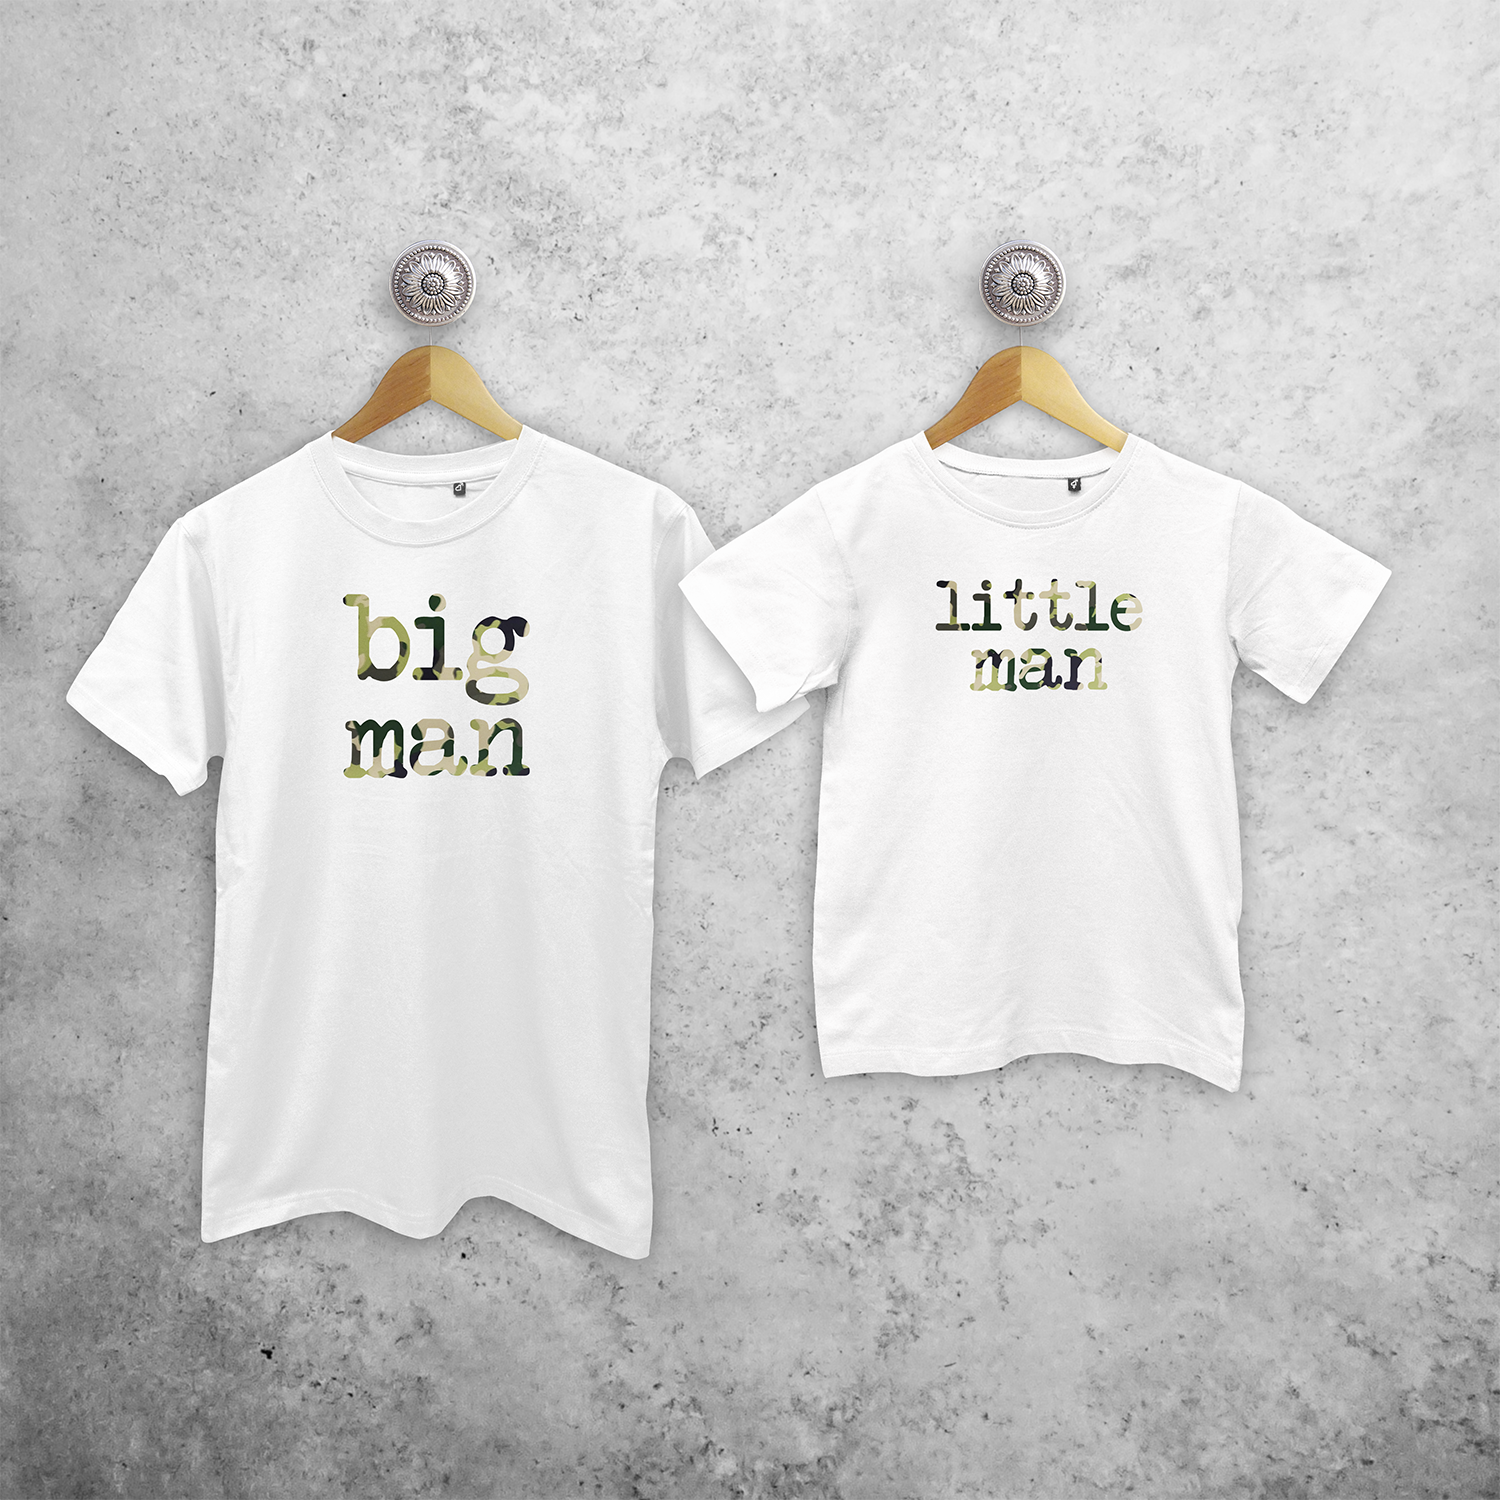 'Big man' & 'Little man' matching shirts